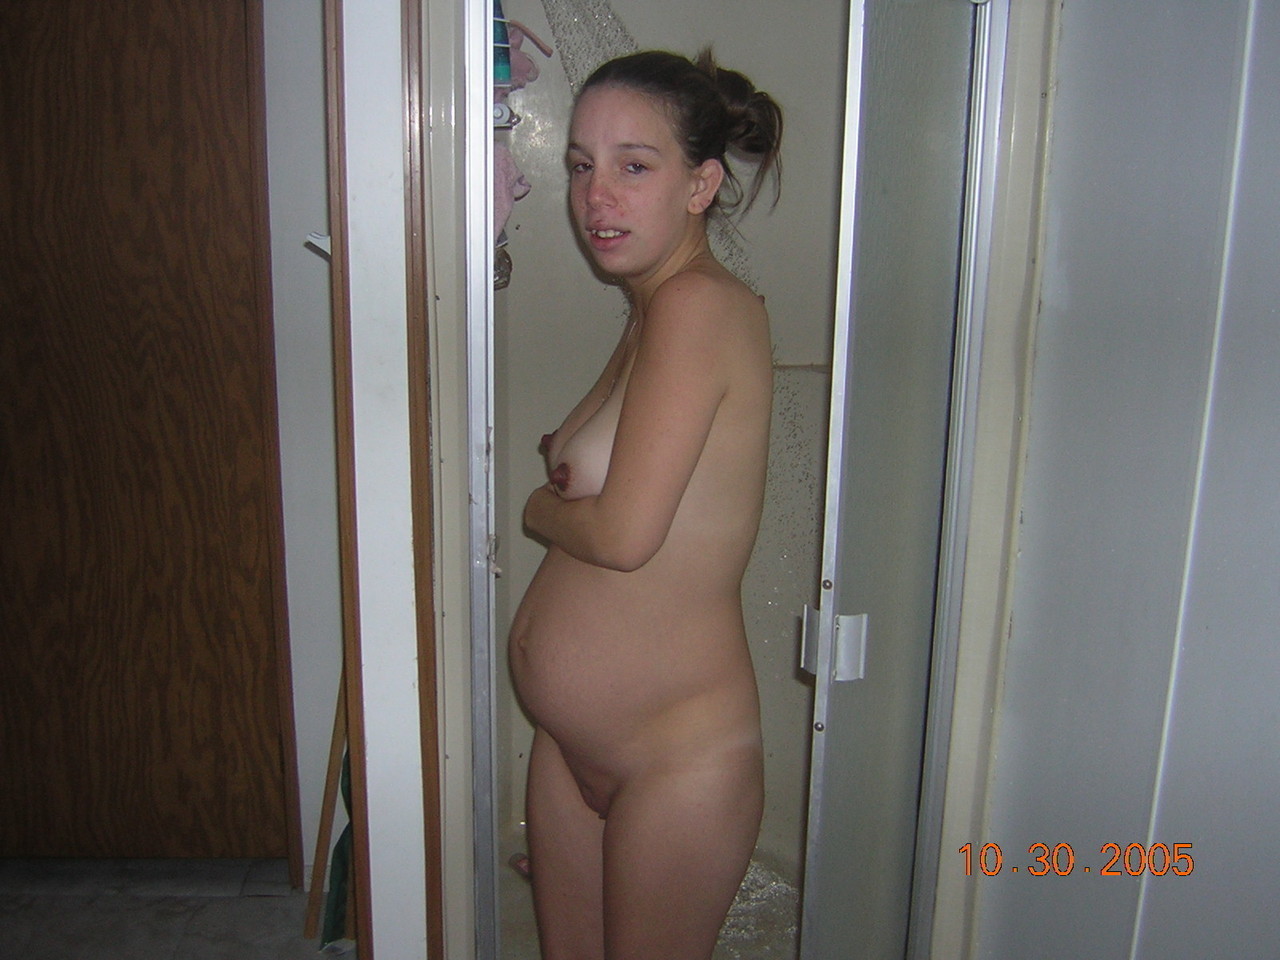 Sister cream pie pregnant